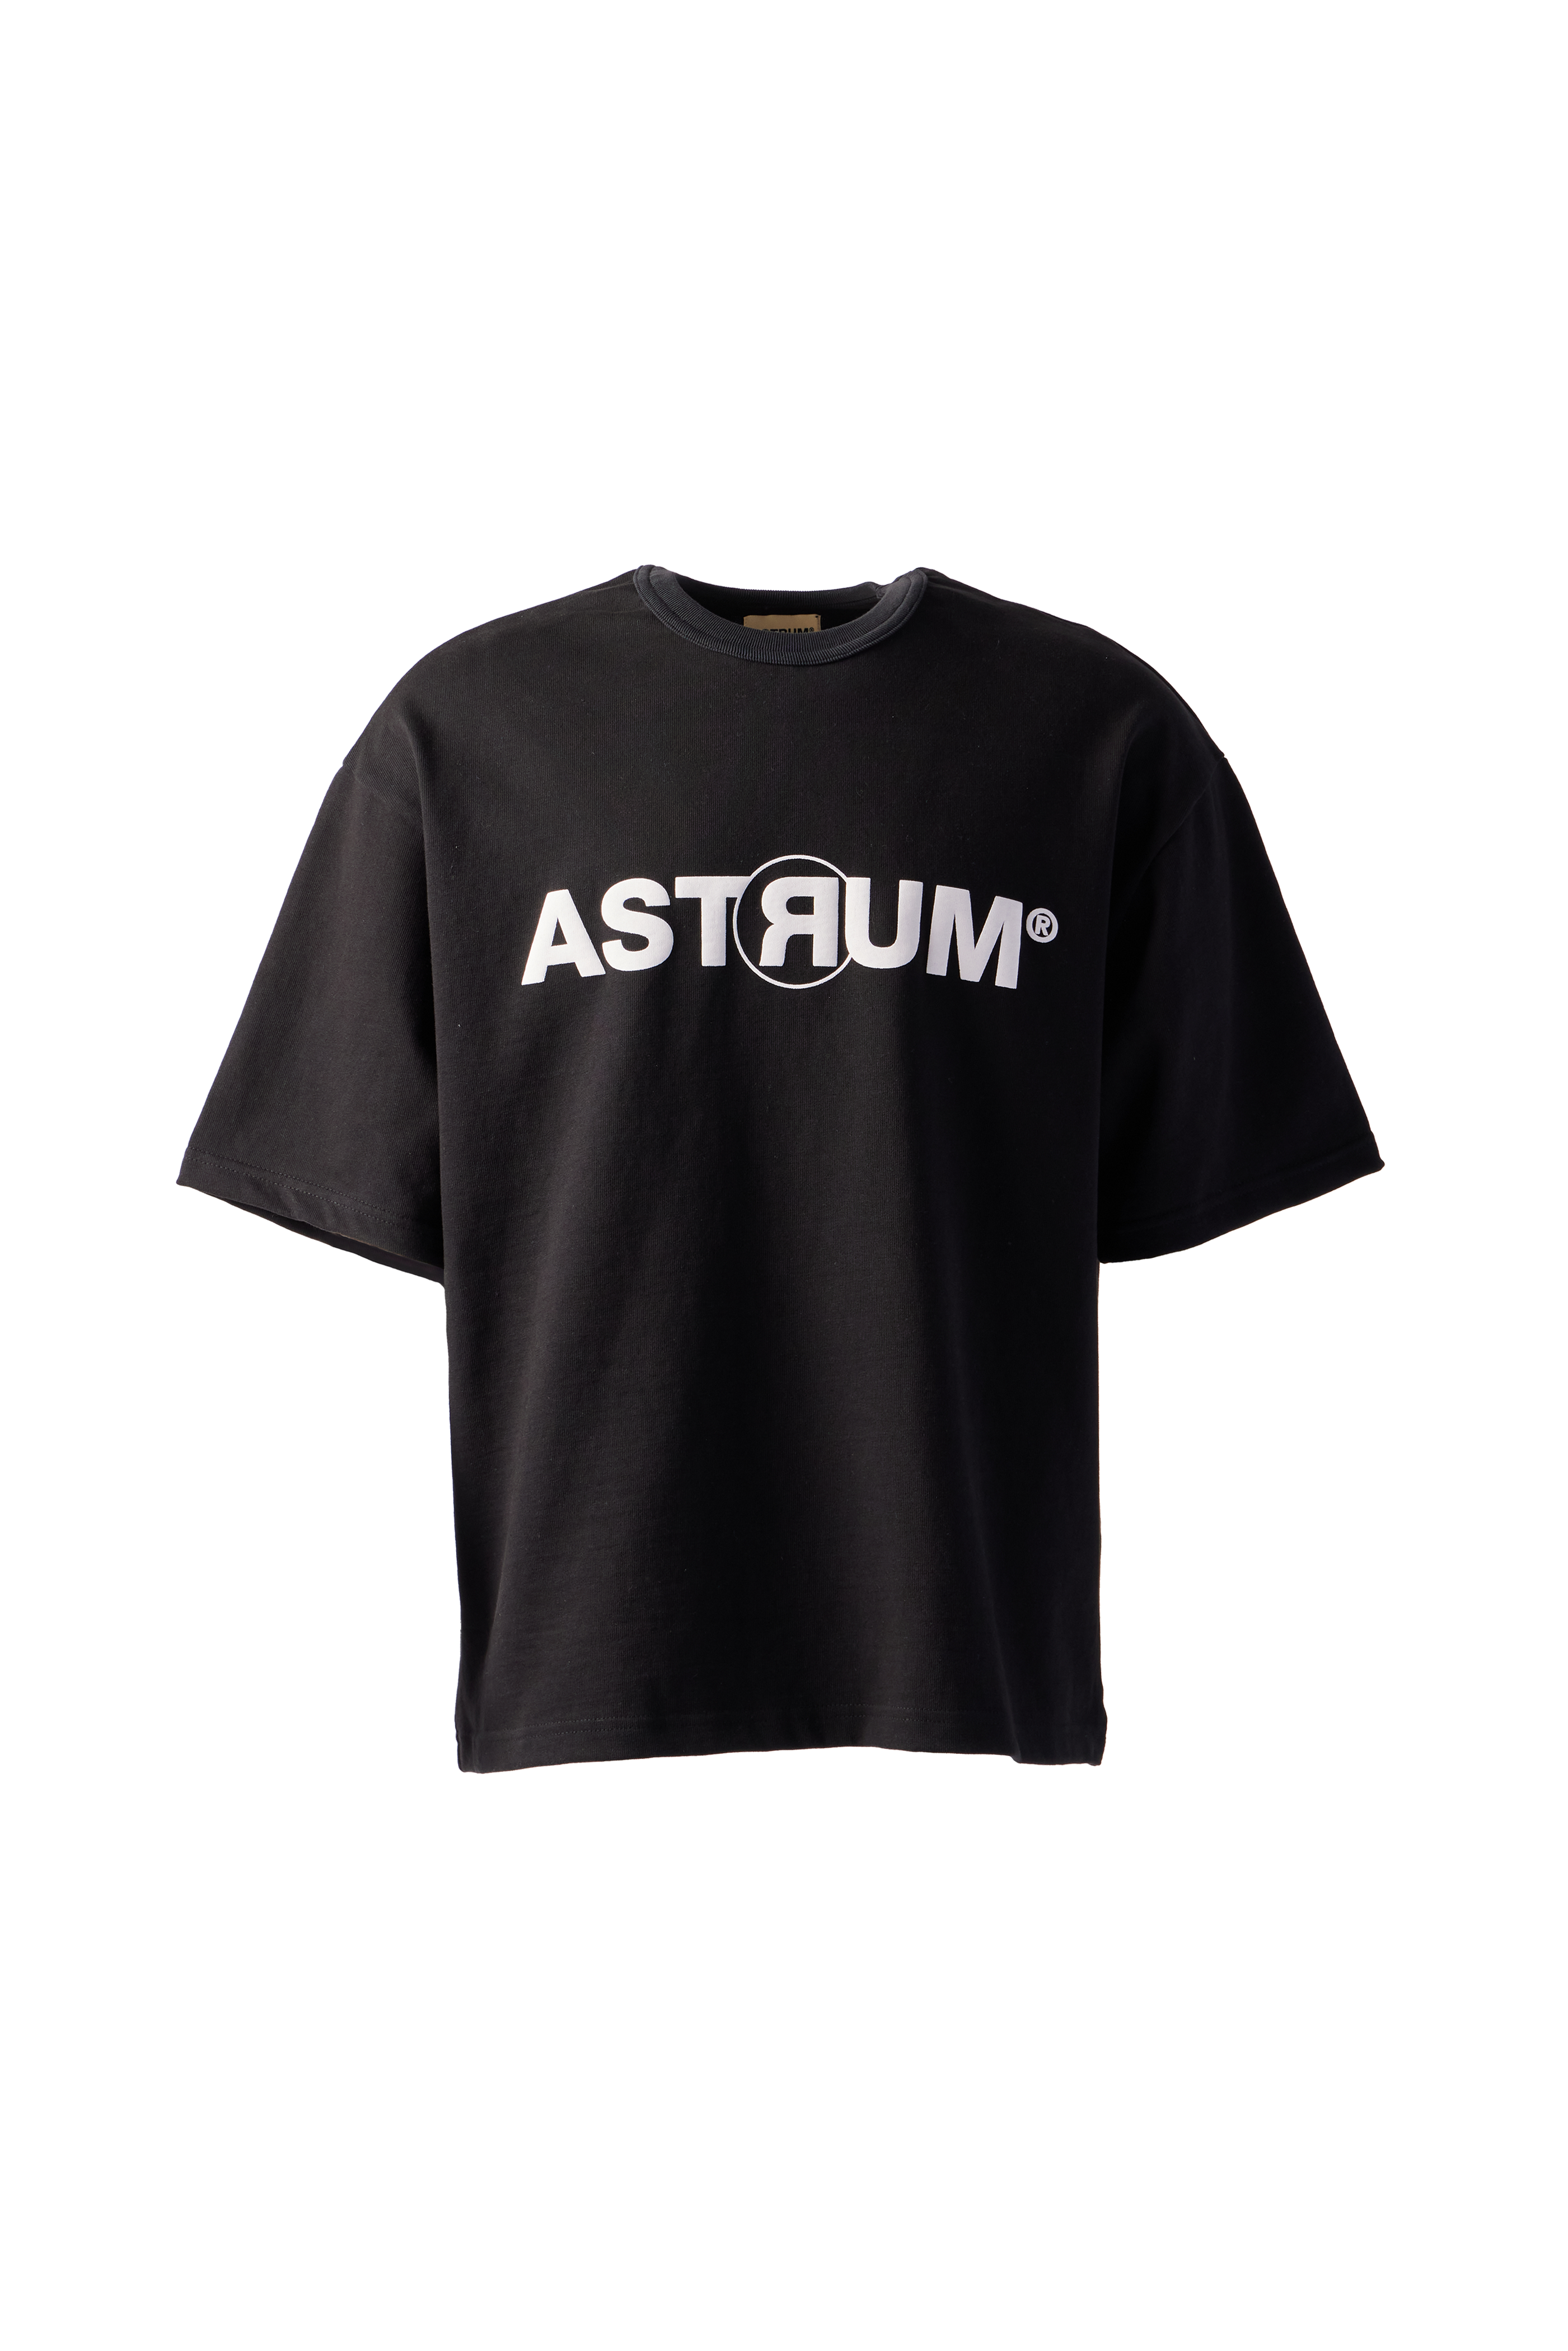 ASTRUM - Trademark Tee product image